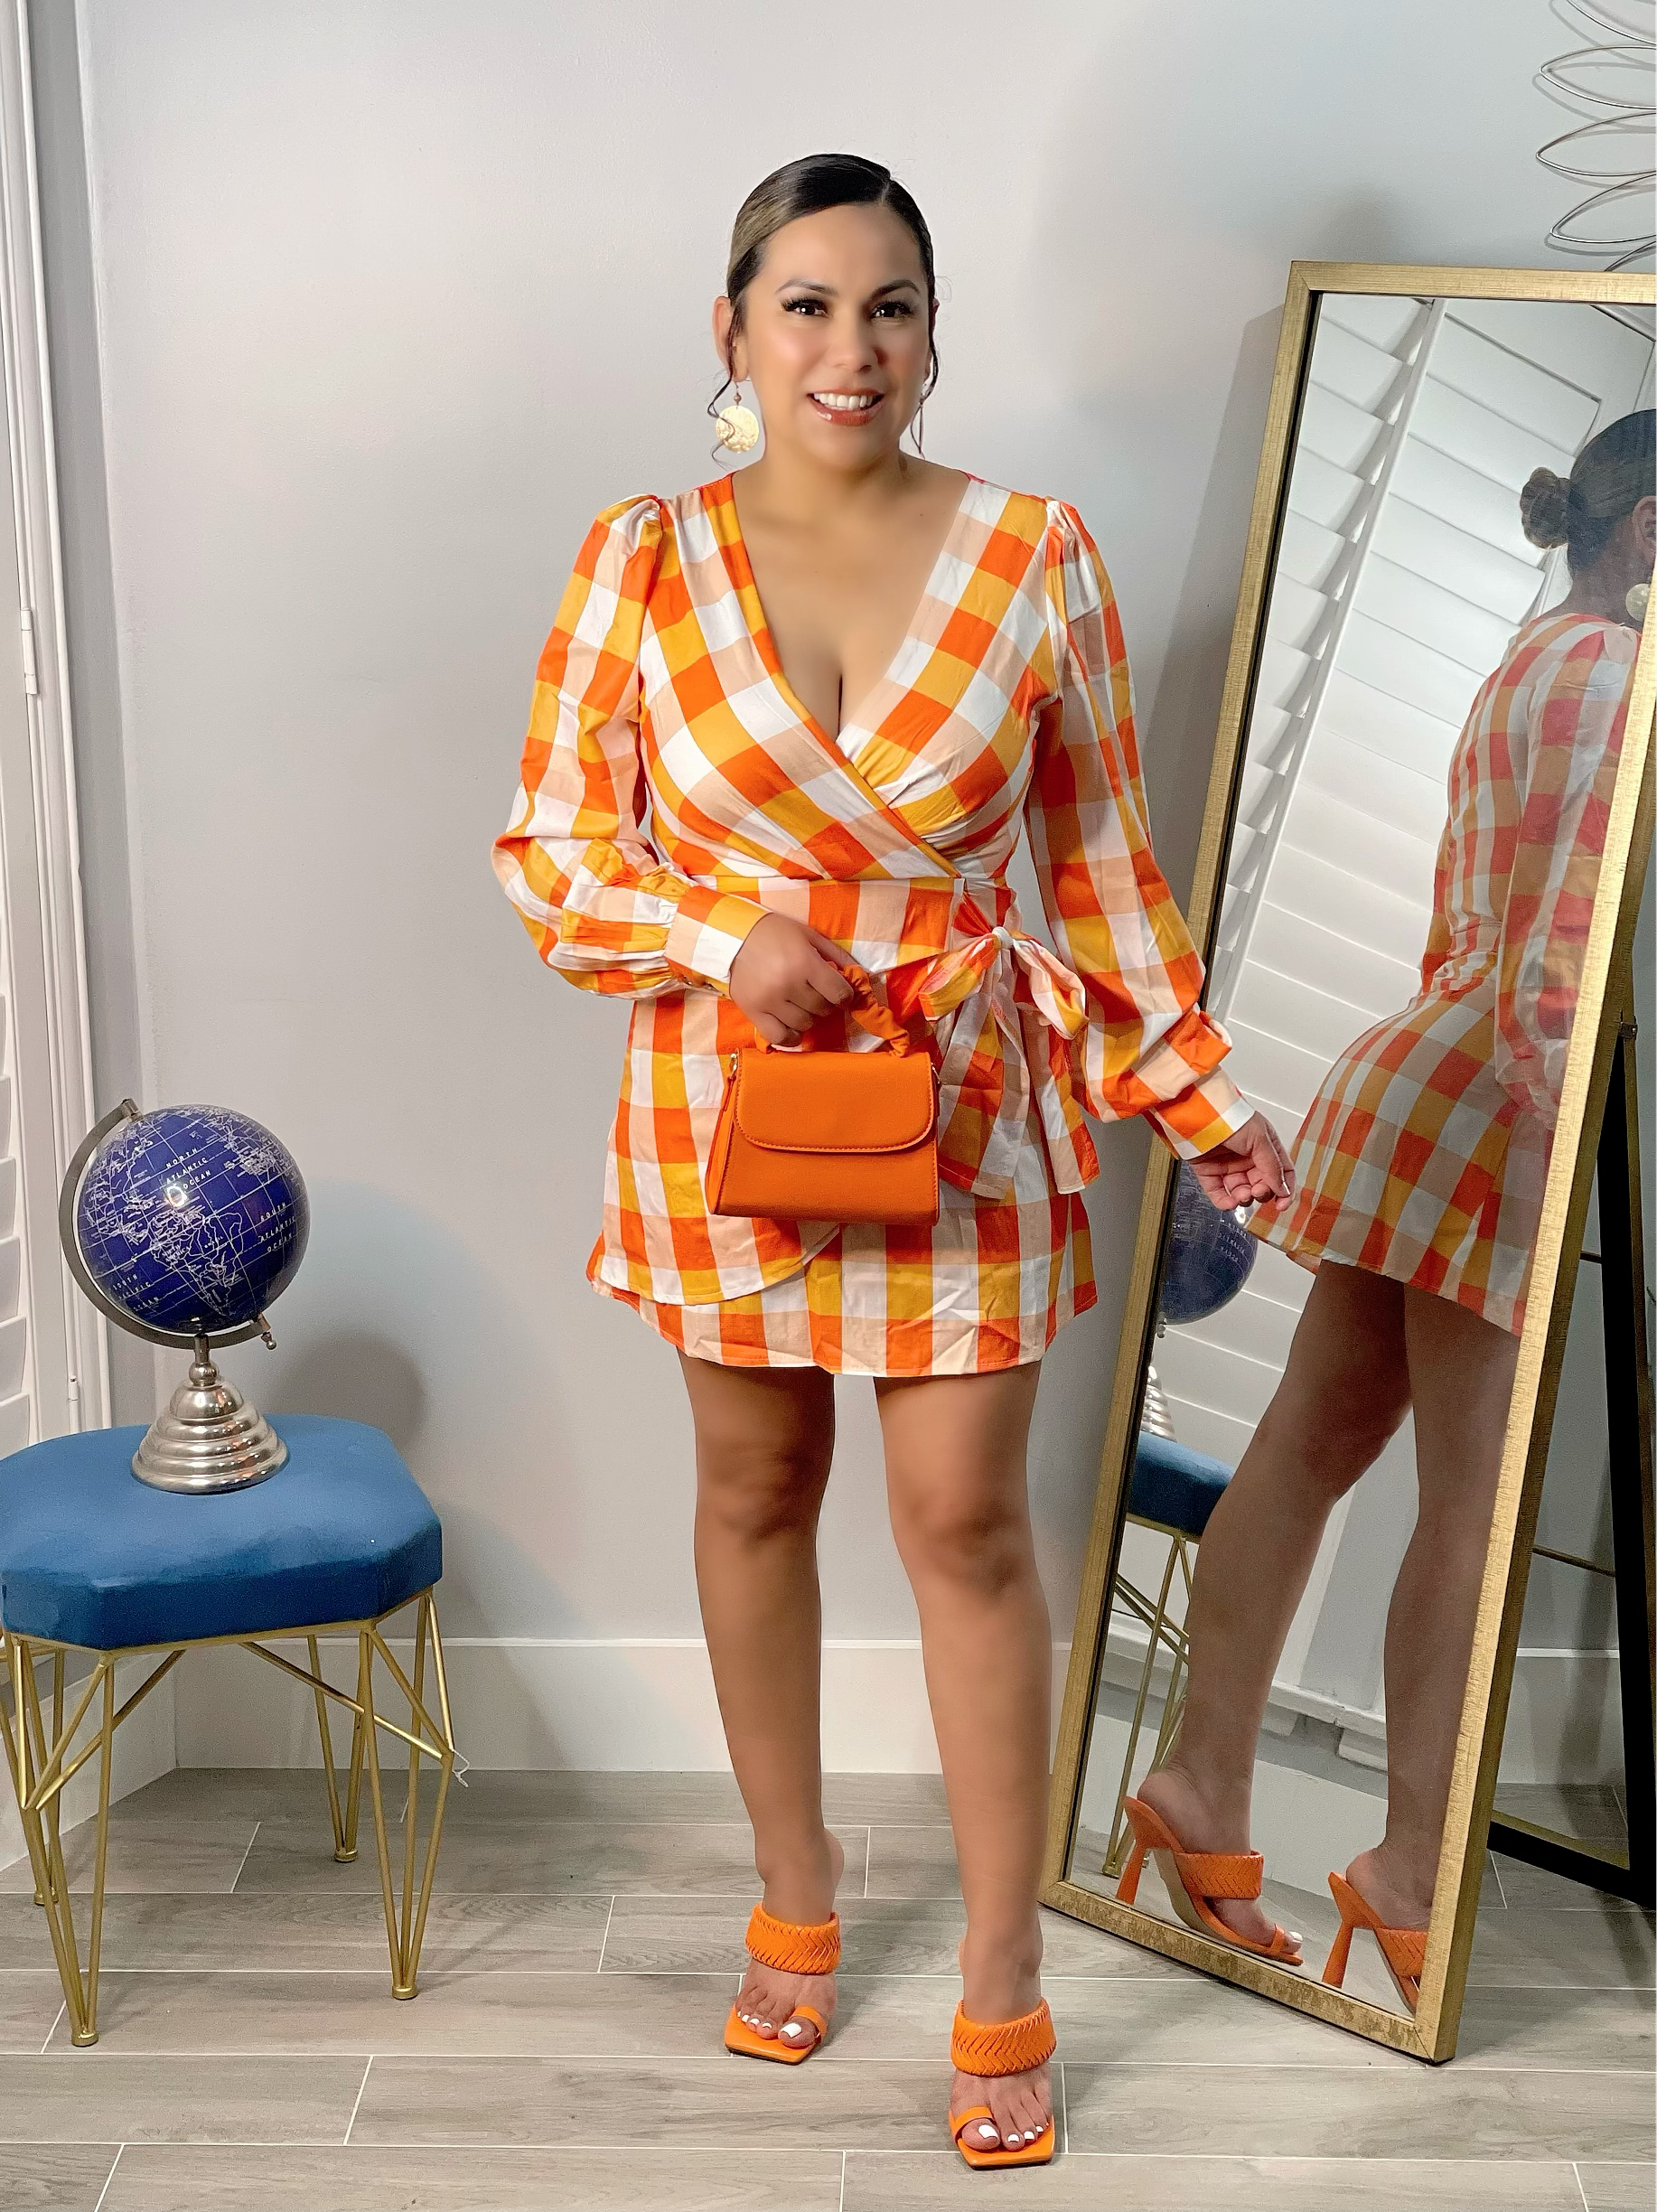 La Media Naranja Dress